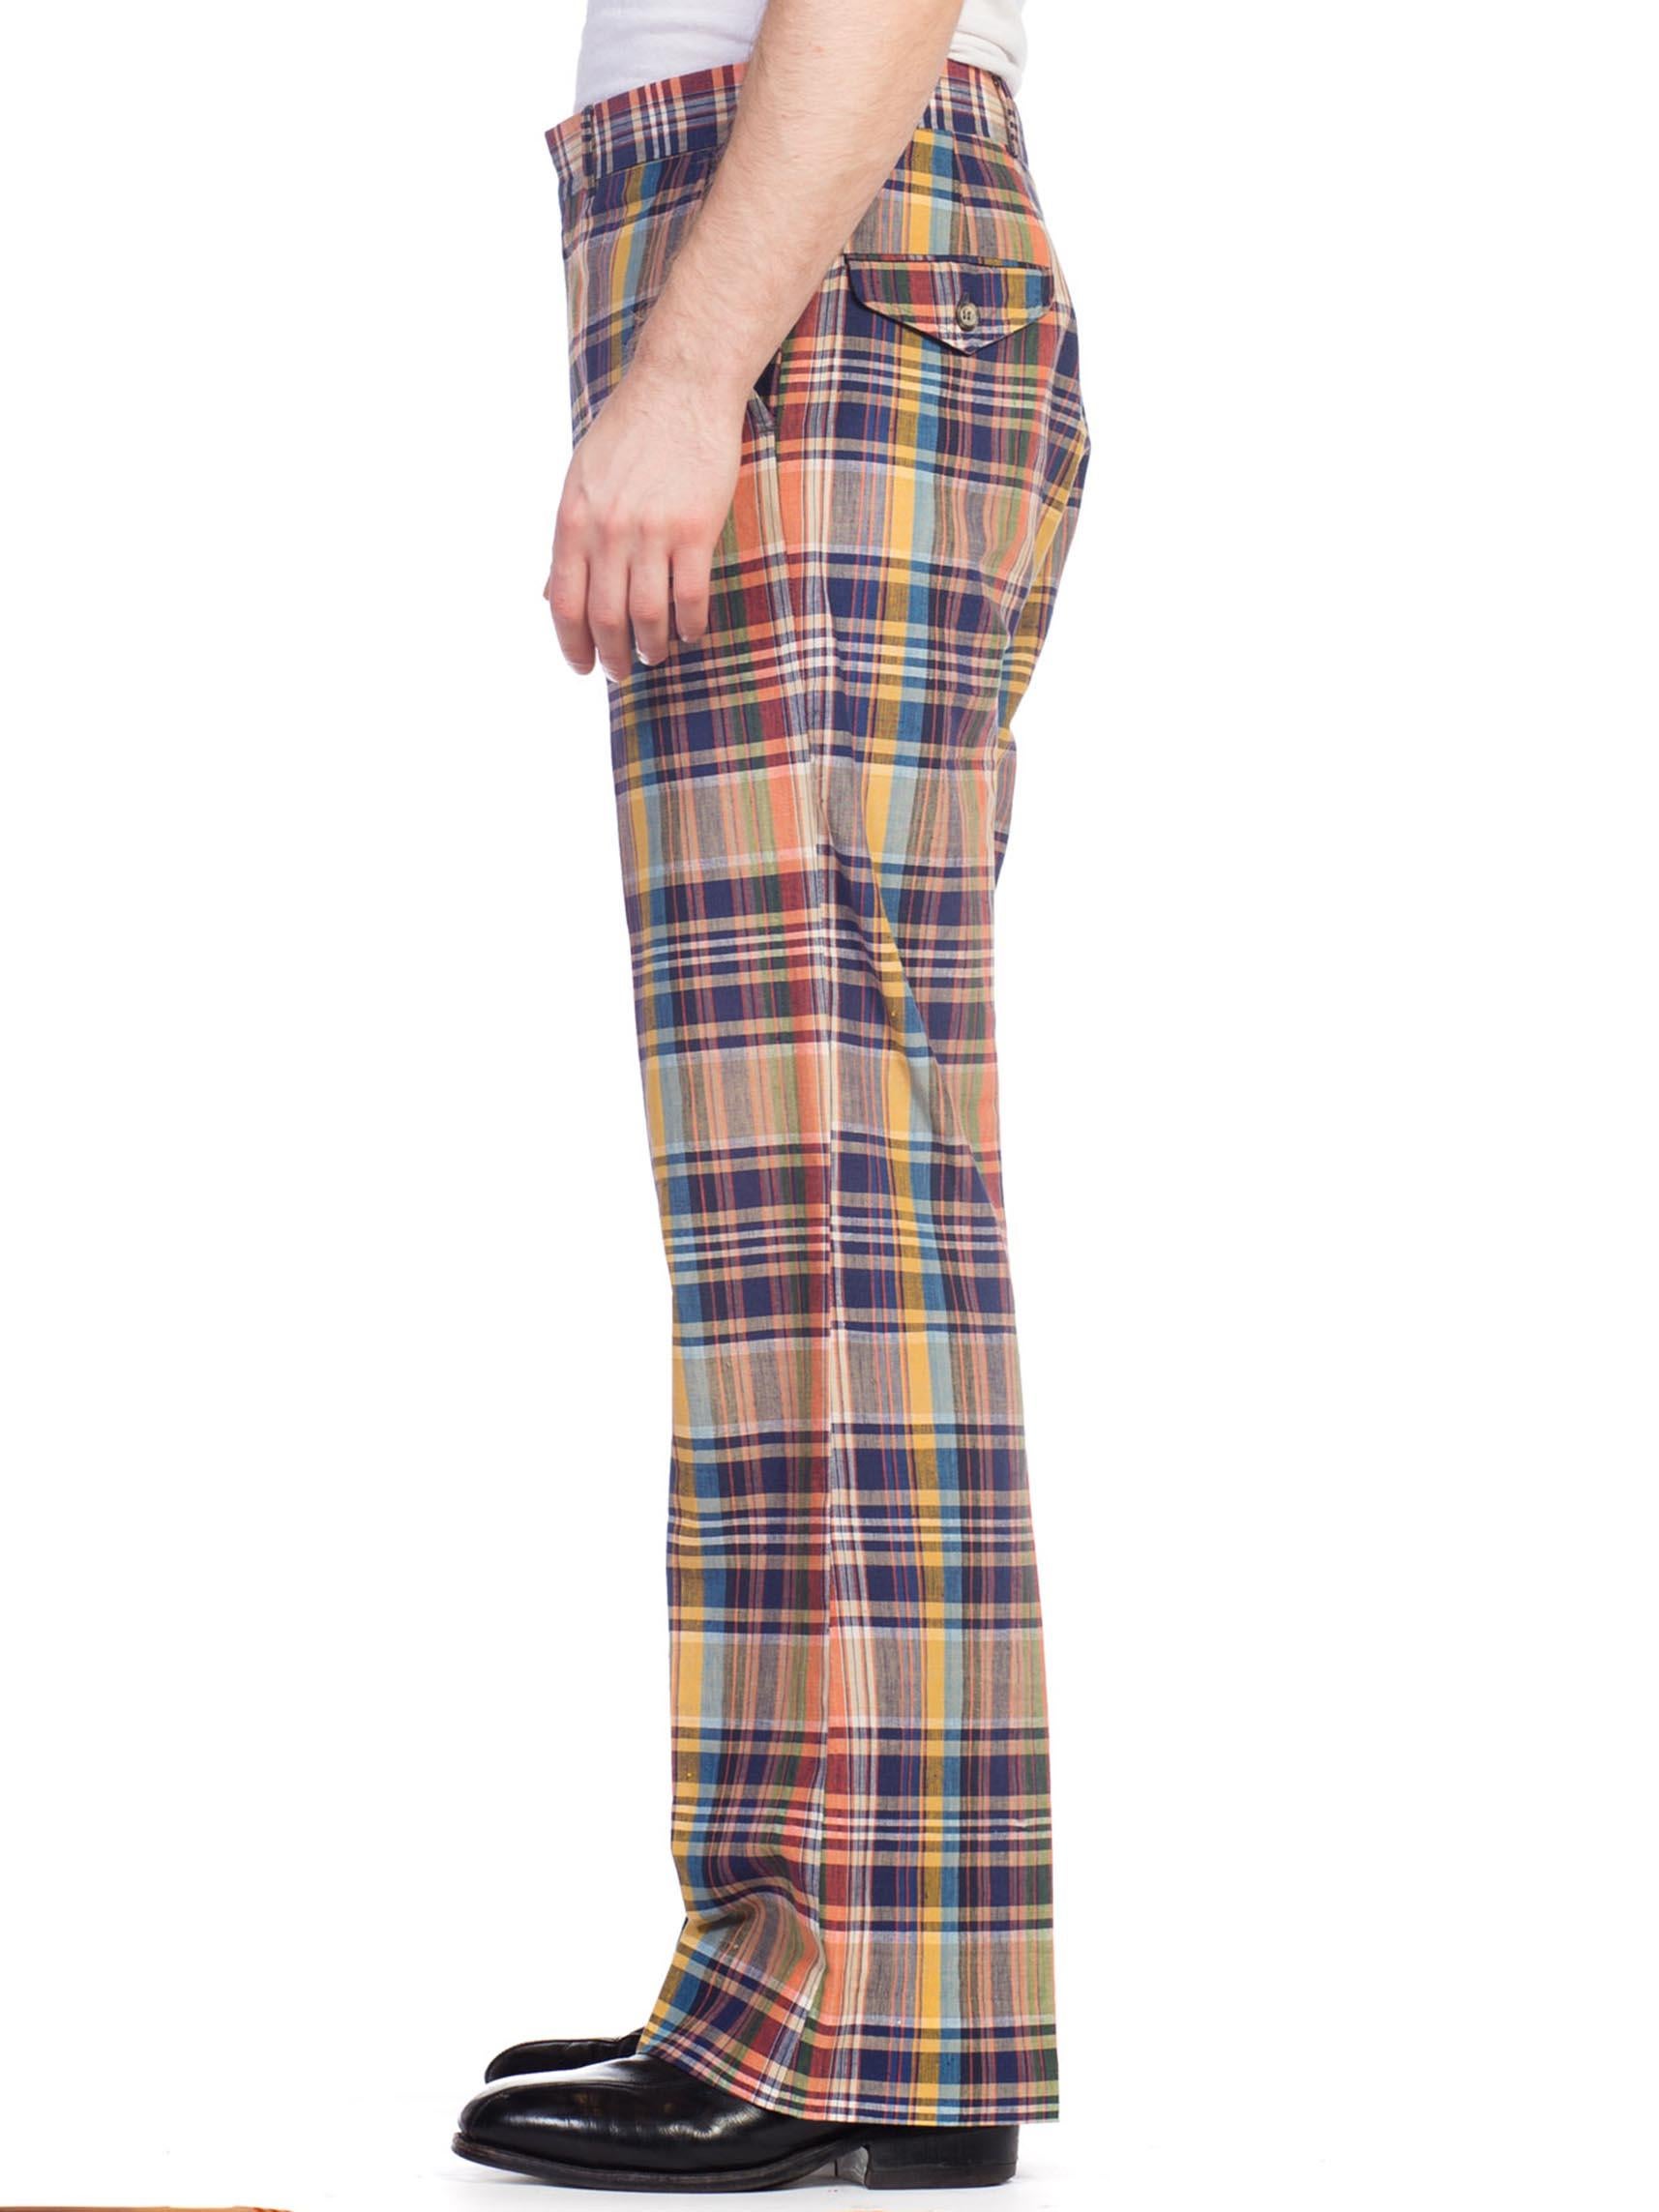 1960s plaid pants